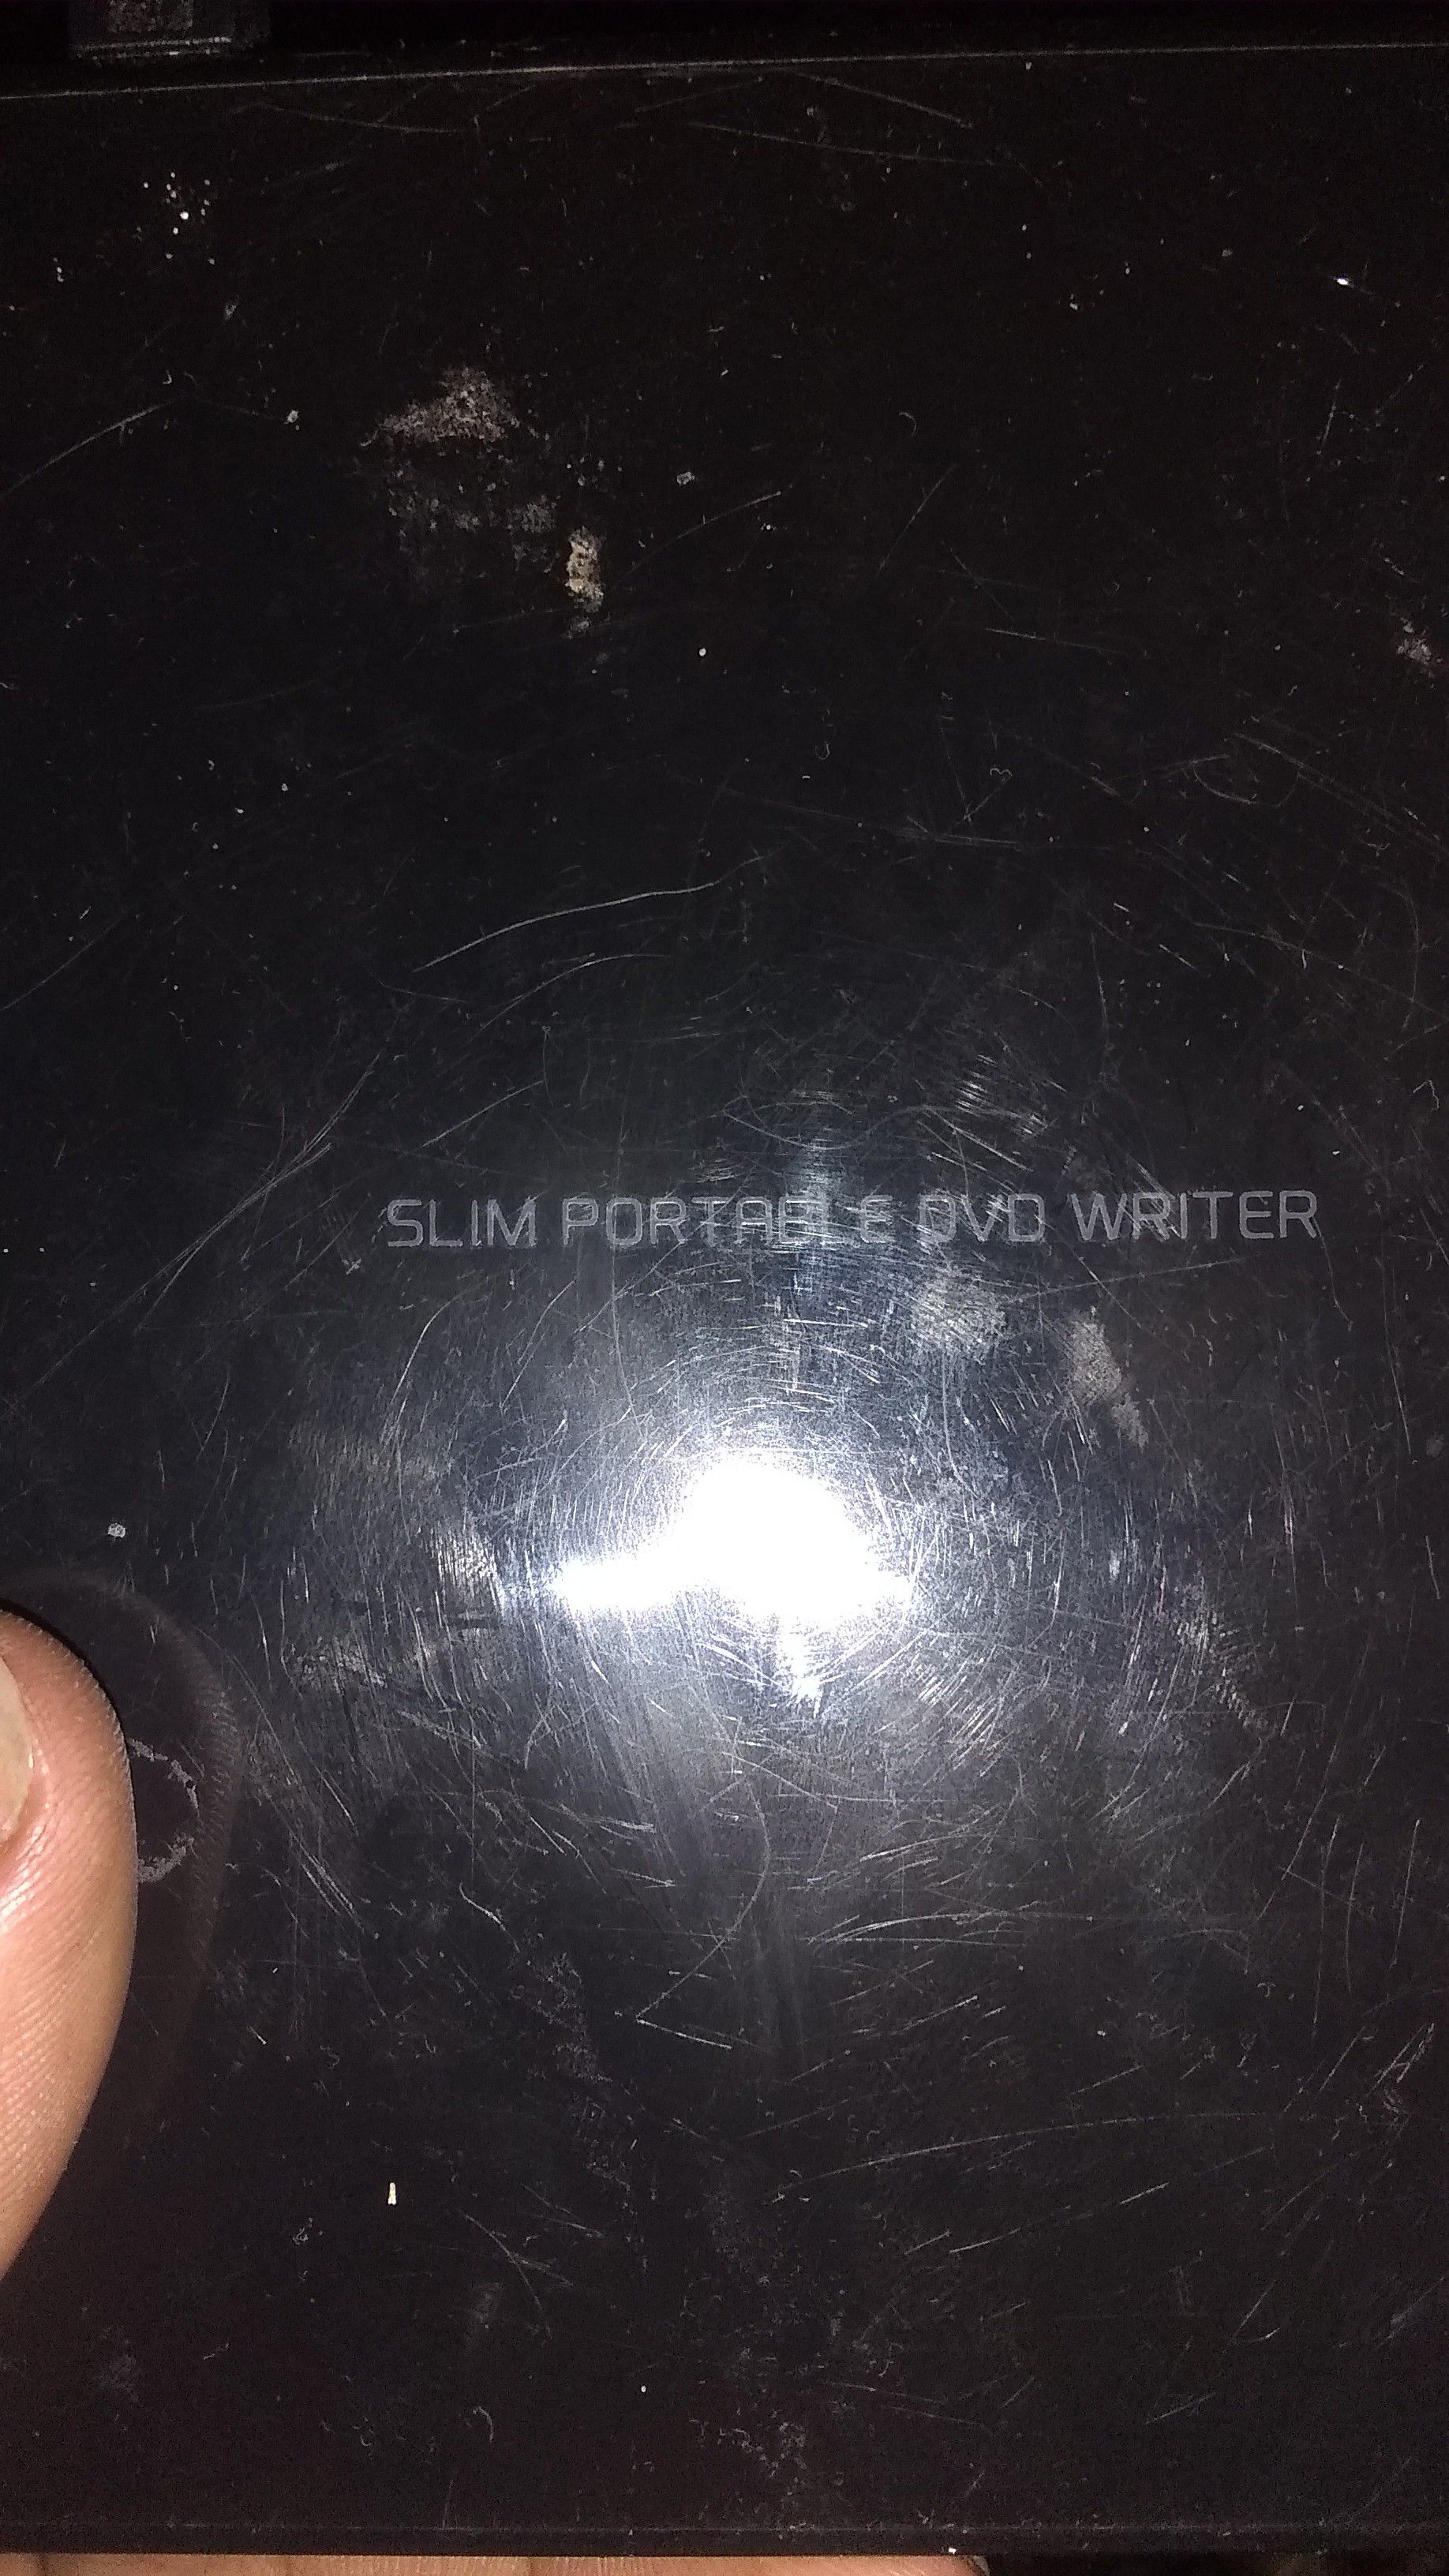 Slim portable DVD writer